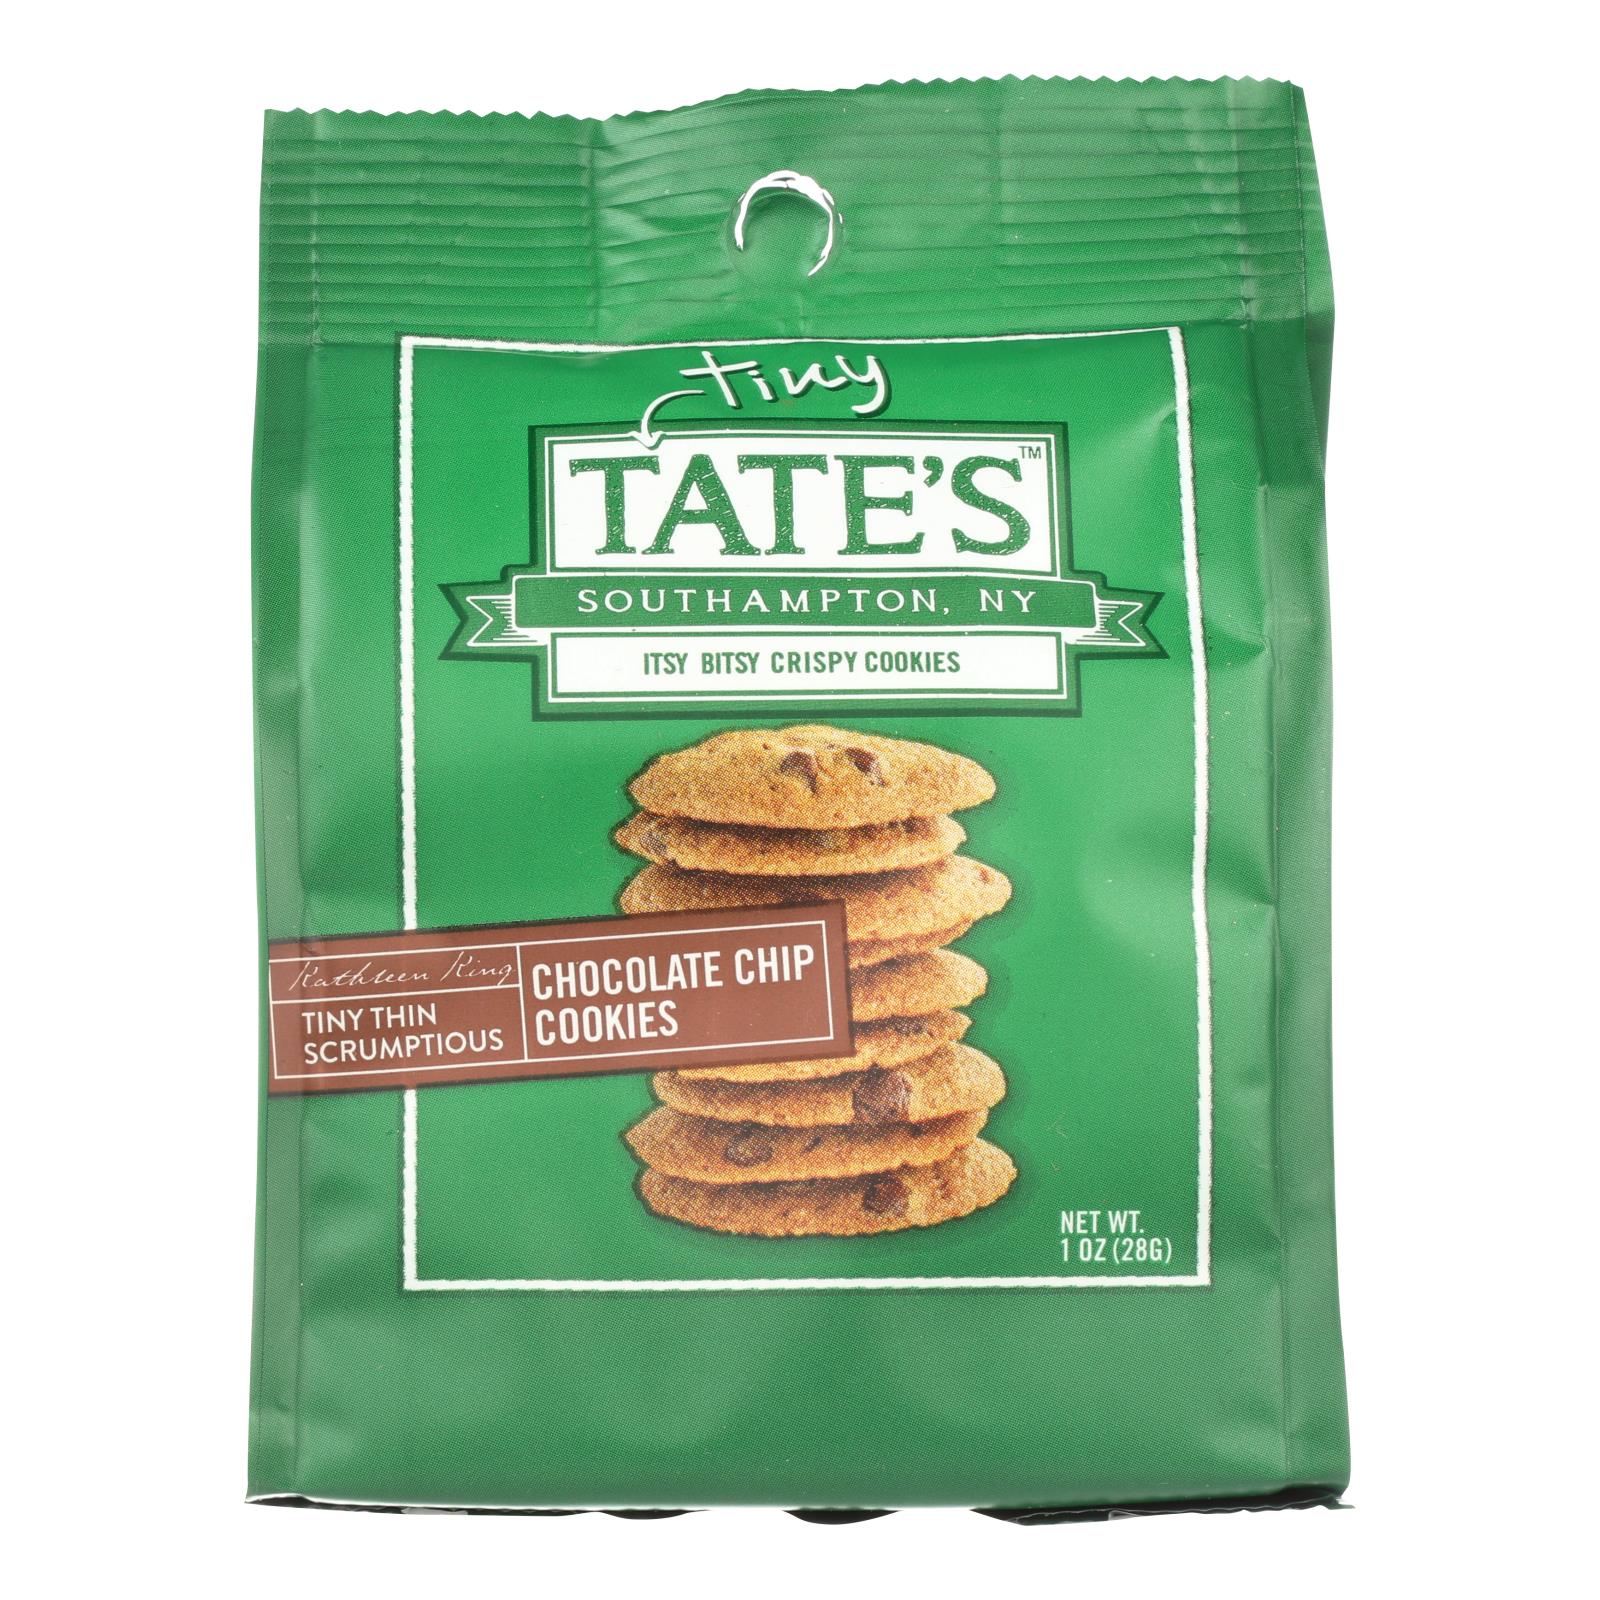 Tate's Bake Shop Itsy Bitsy Crispy Chocolate Chip Cookies - 12개 묶음상품 - 1 OZ